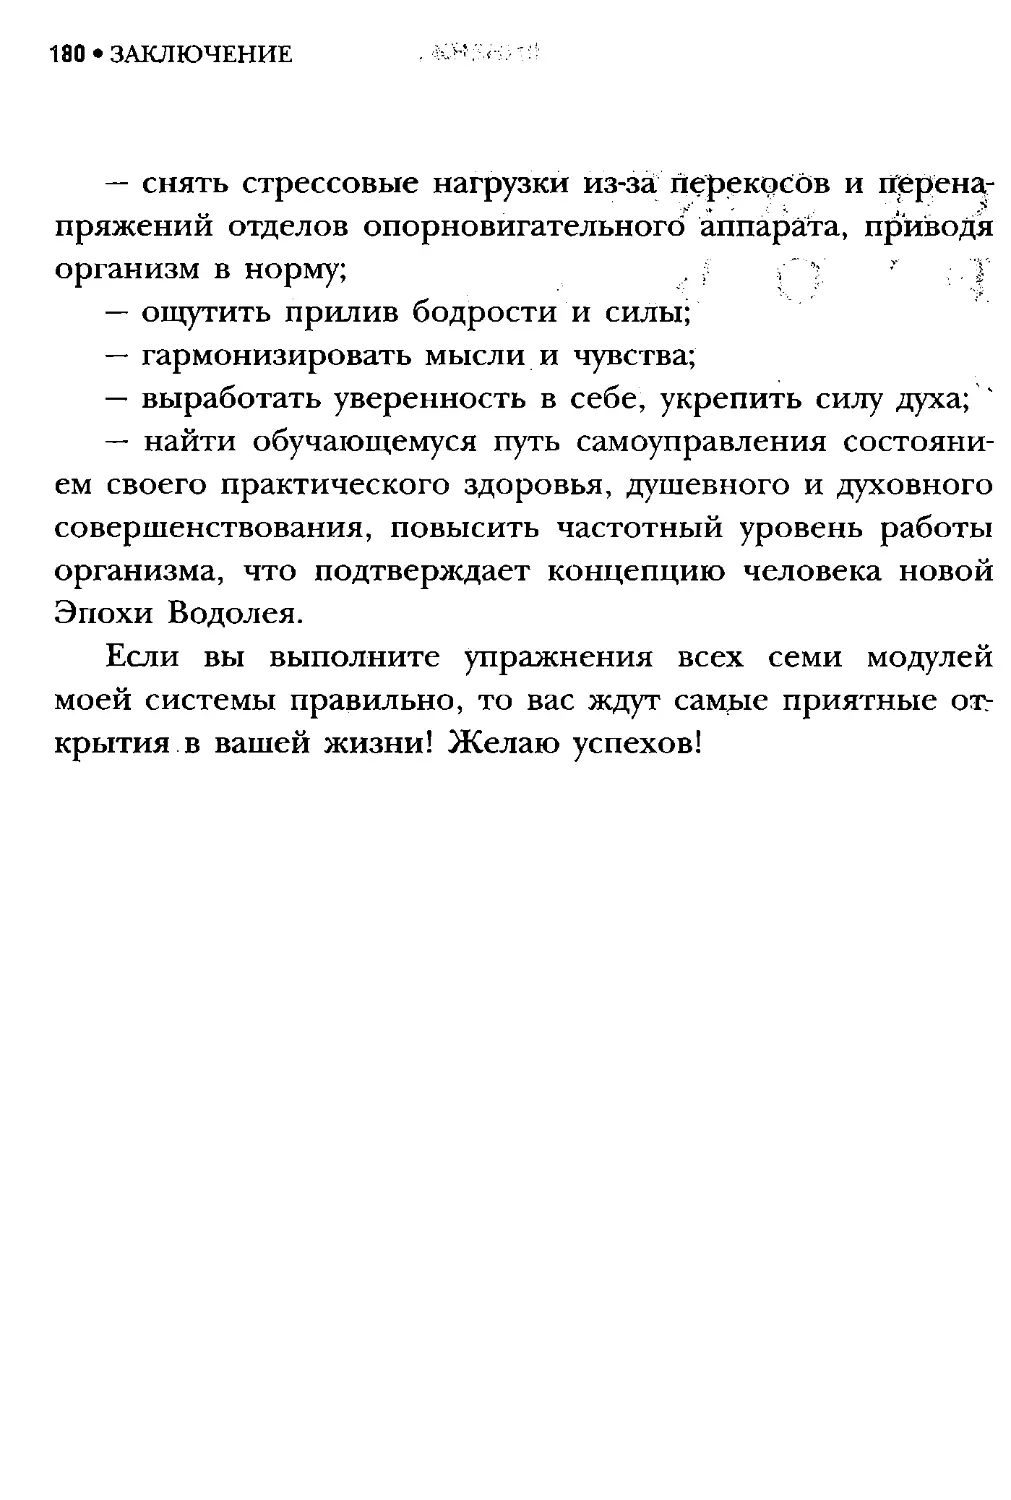 ﻿СлавянеТекст_page0090_1